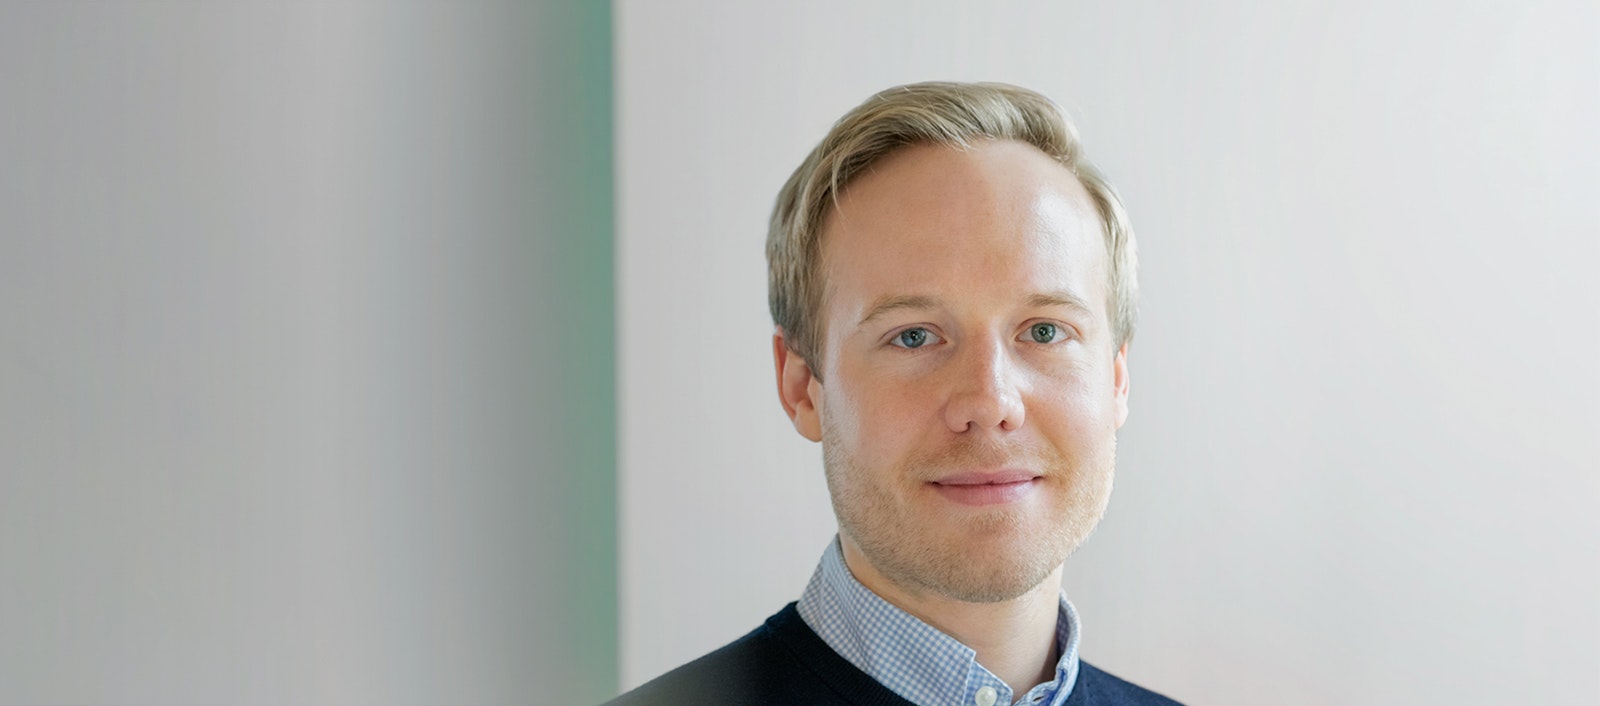 Martin Kruge Ericsson, VC investor at Eight Roads